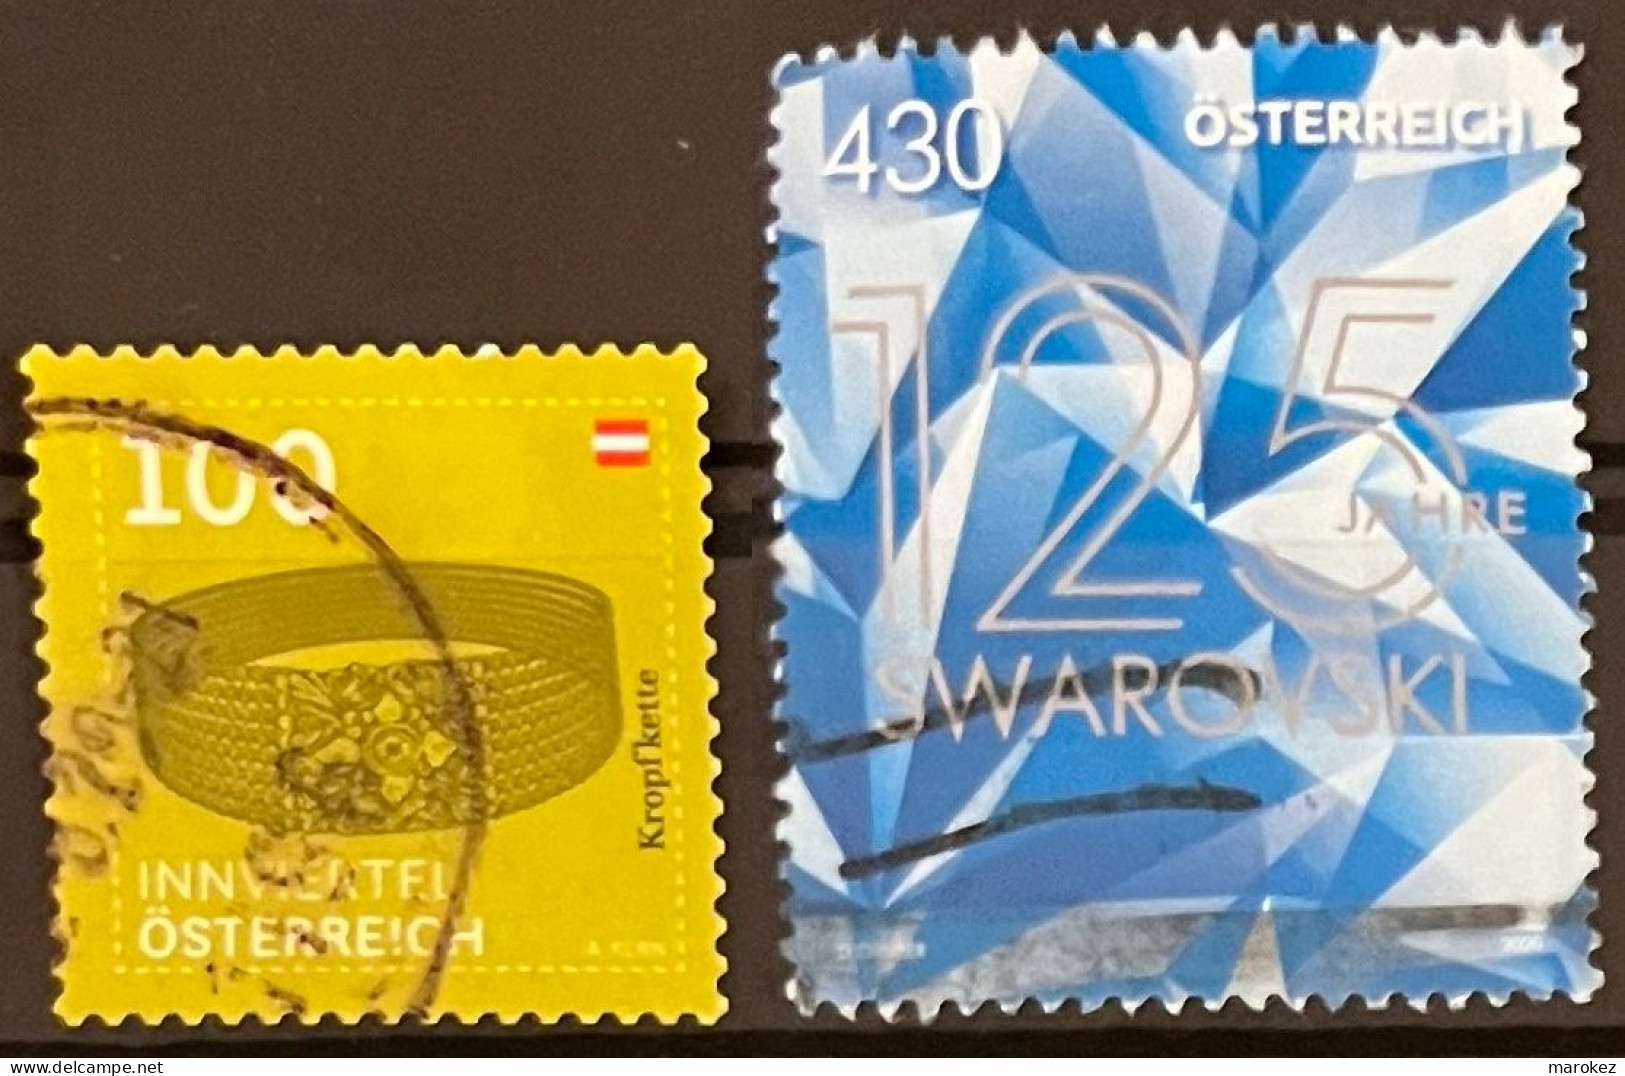 AUSTRIA 2020 Art - Goiter Chain & Swarowski Glass Cutting 2 Postally Used Stamps MICHEL # 3519,3545 - Usados